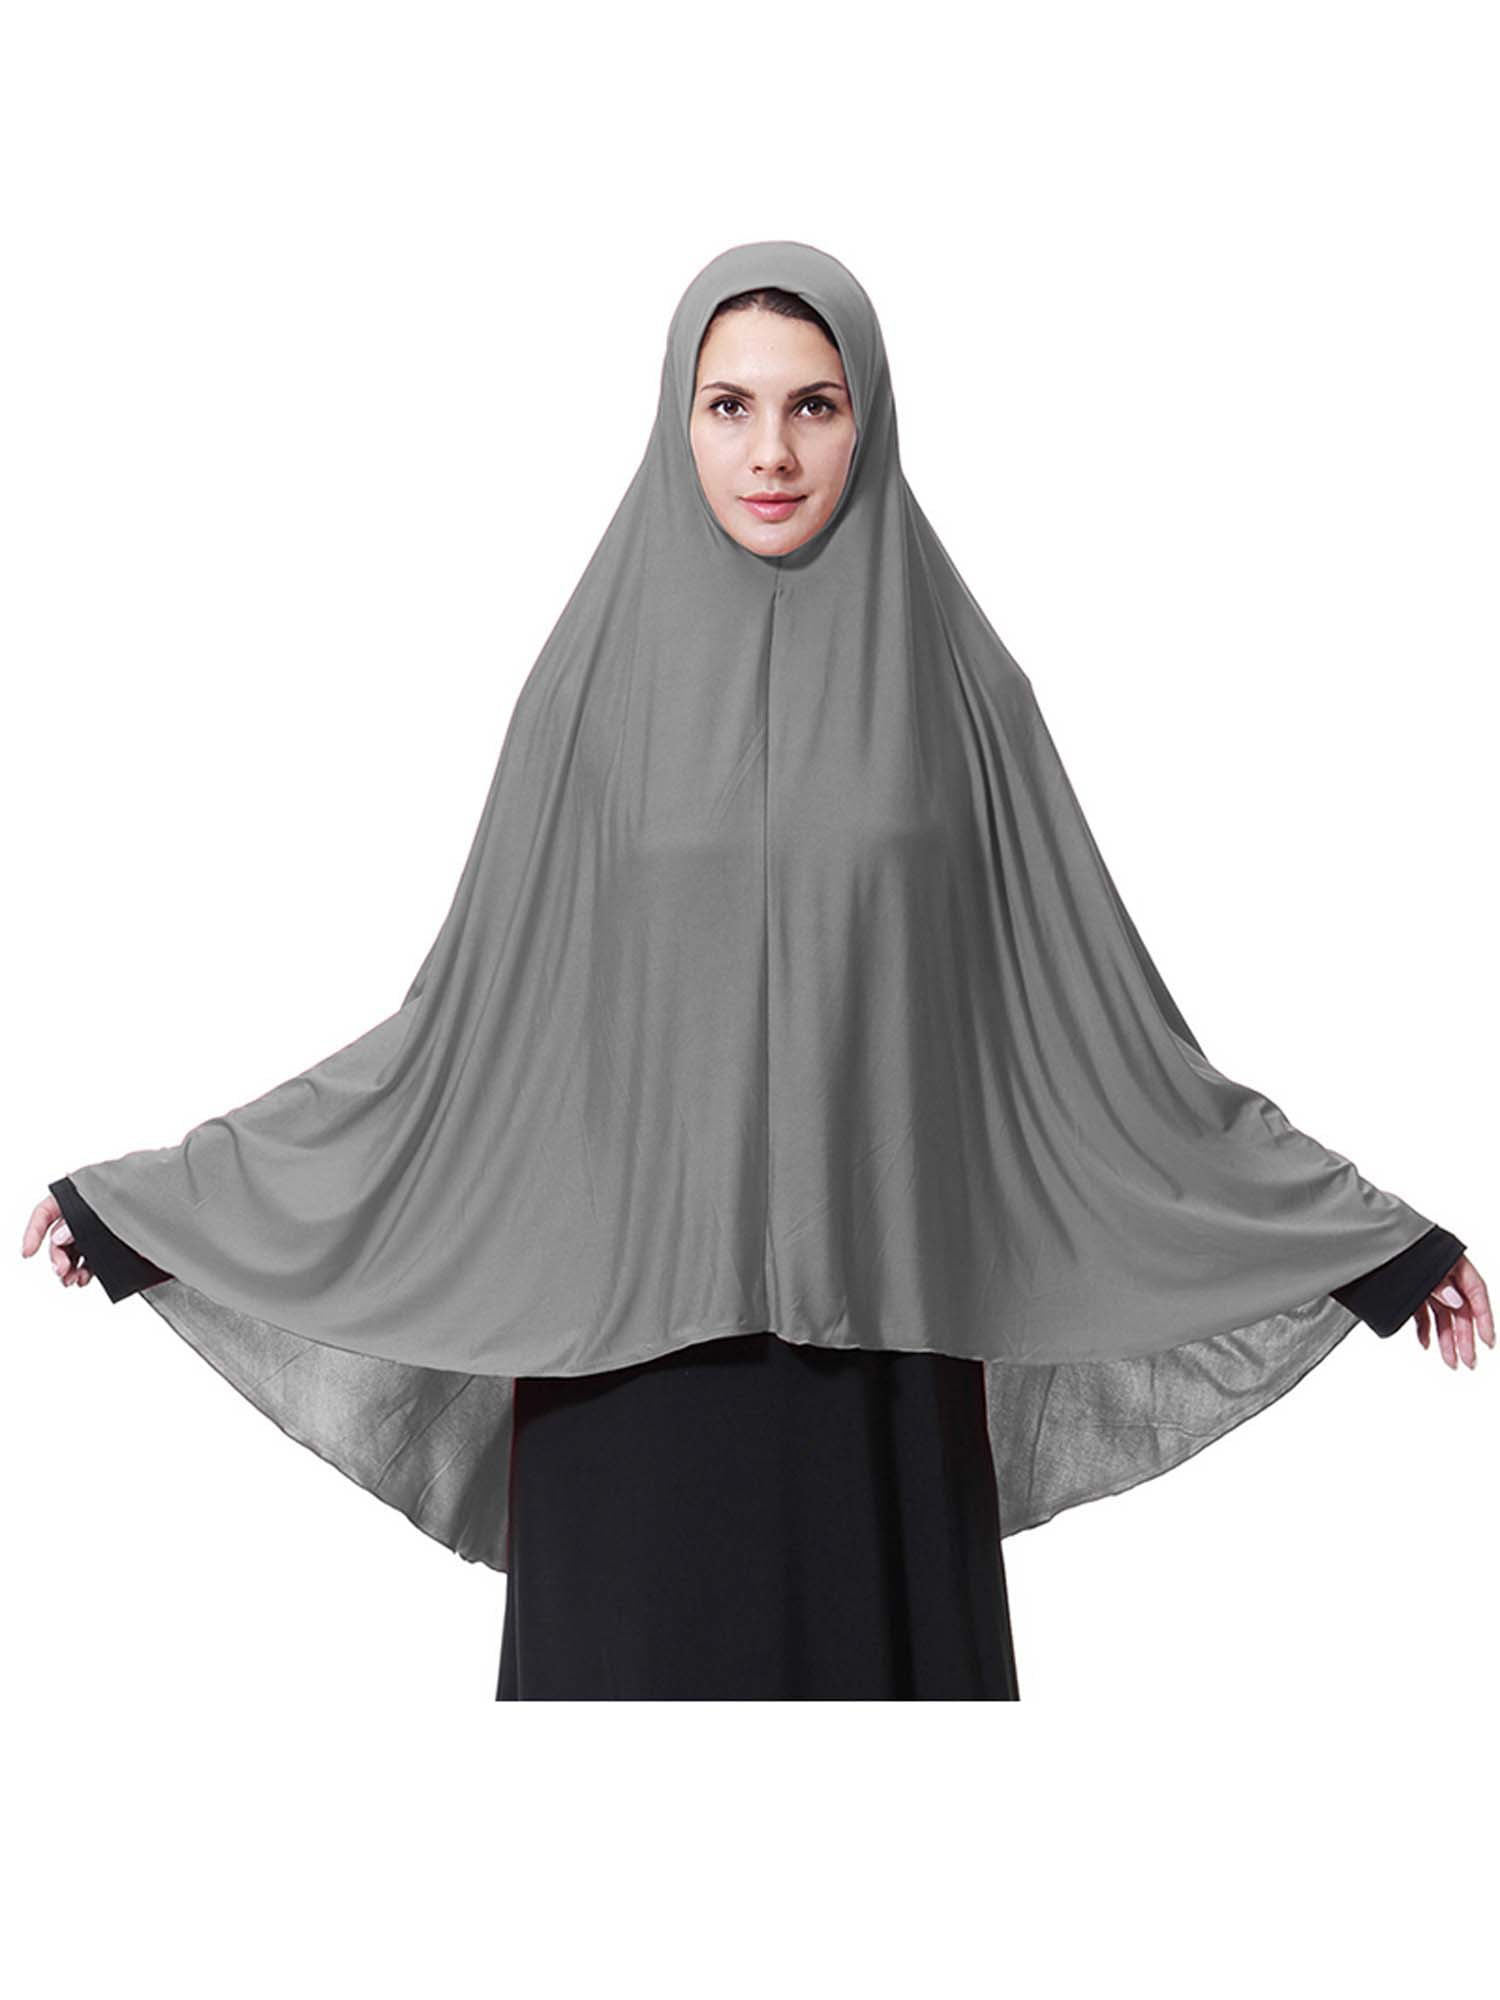 Lallc - Arab Muslim Women Prayer Long Hijab Scarf Shawl Overhead Large